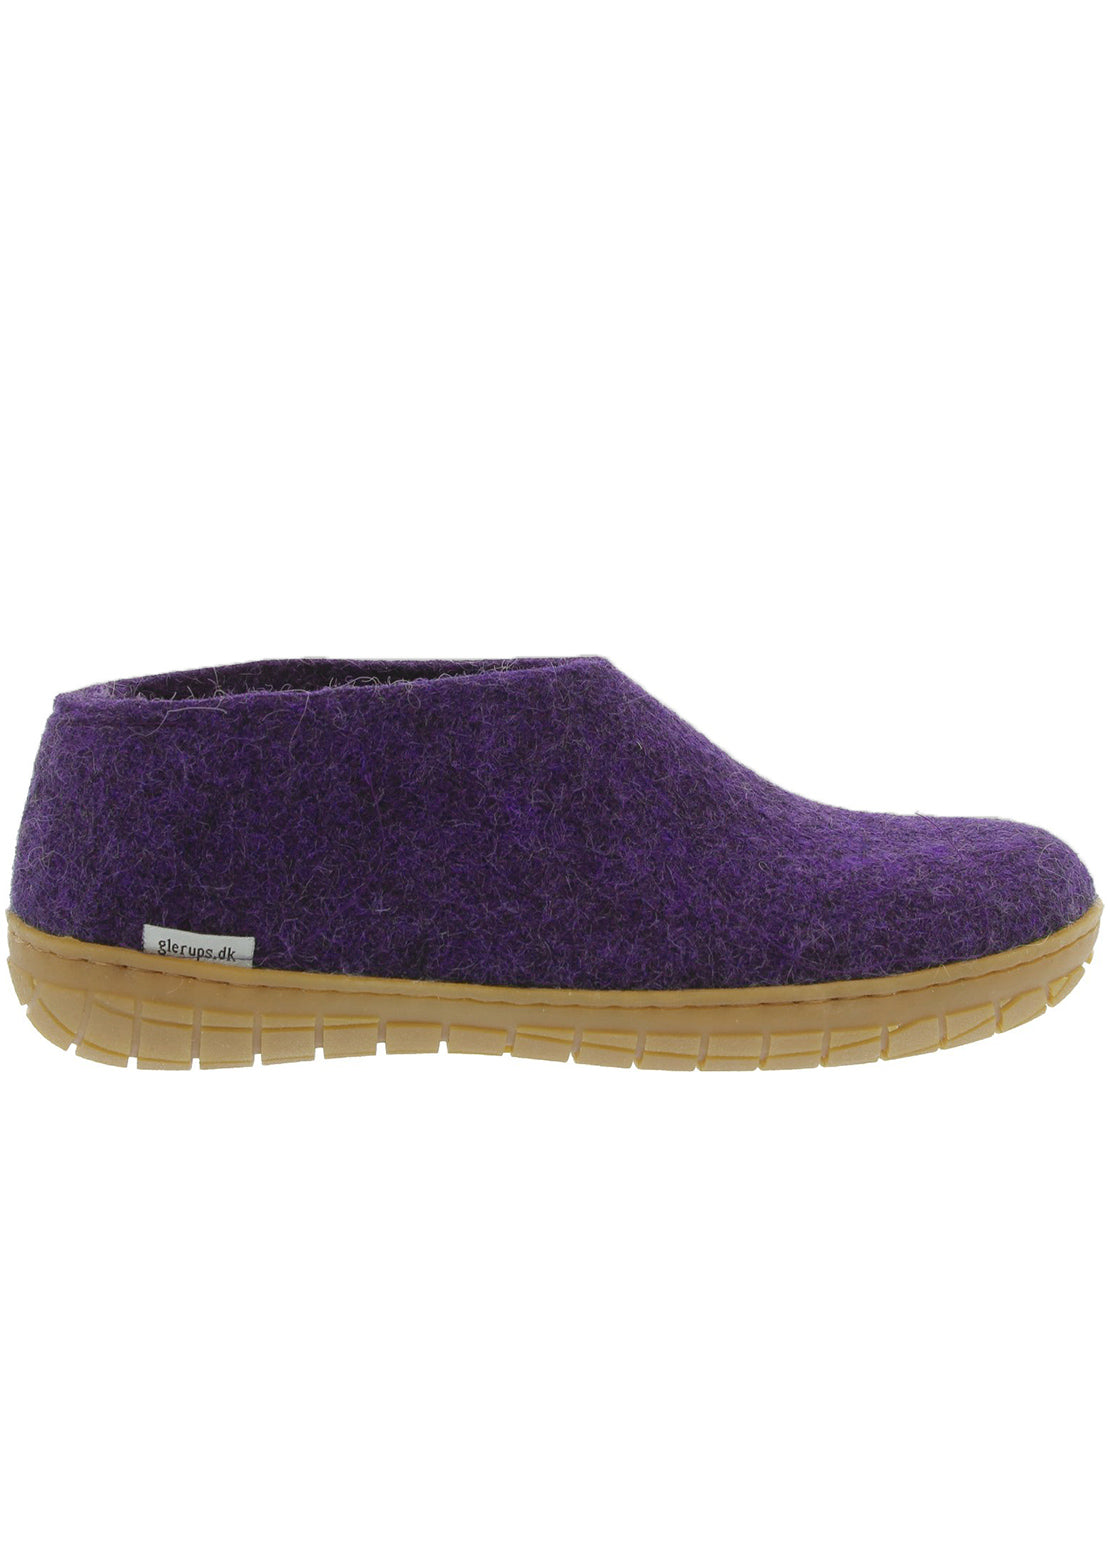 Glerups Unisex Natural Rubber Shoes Purple